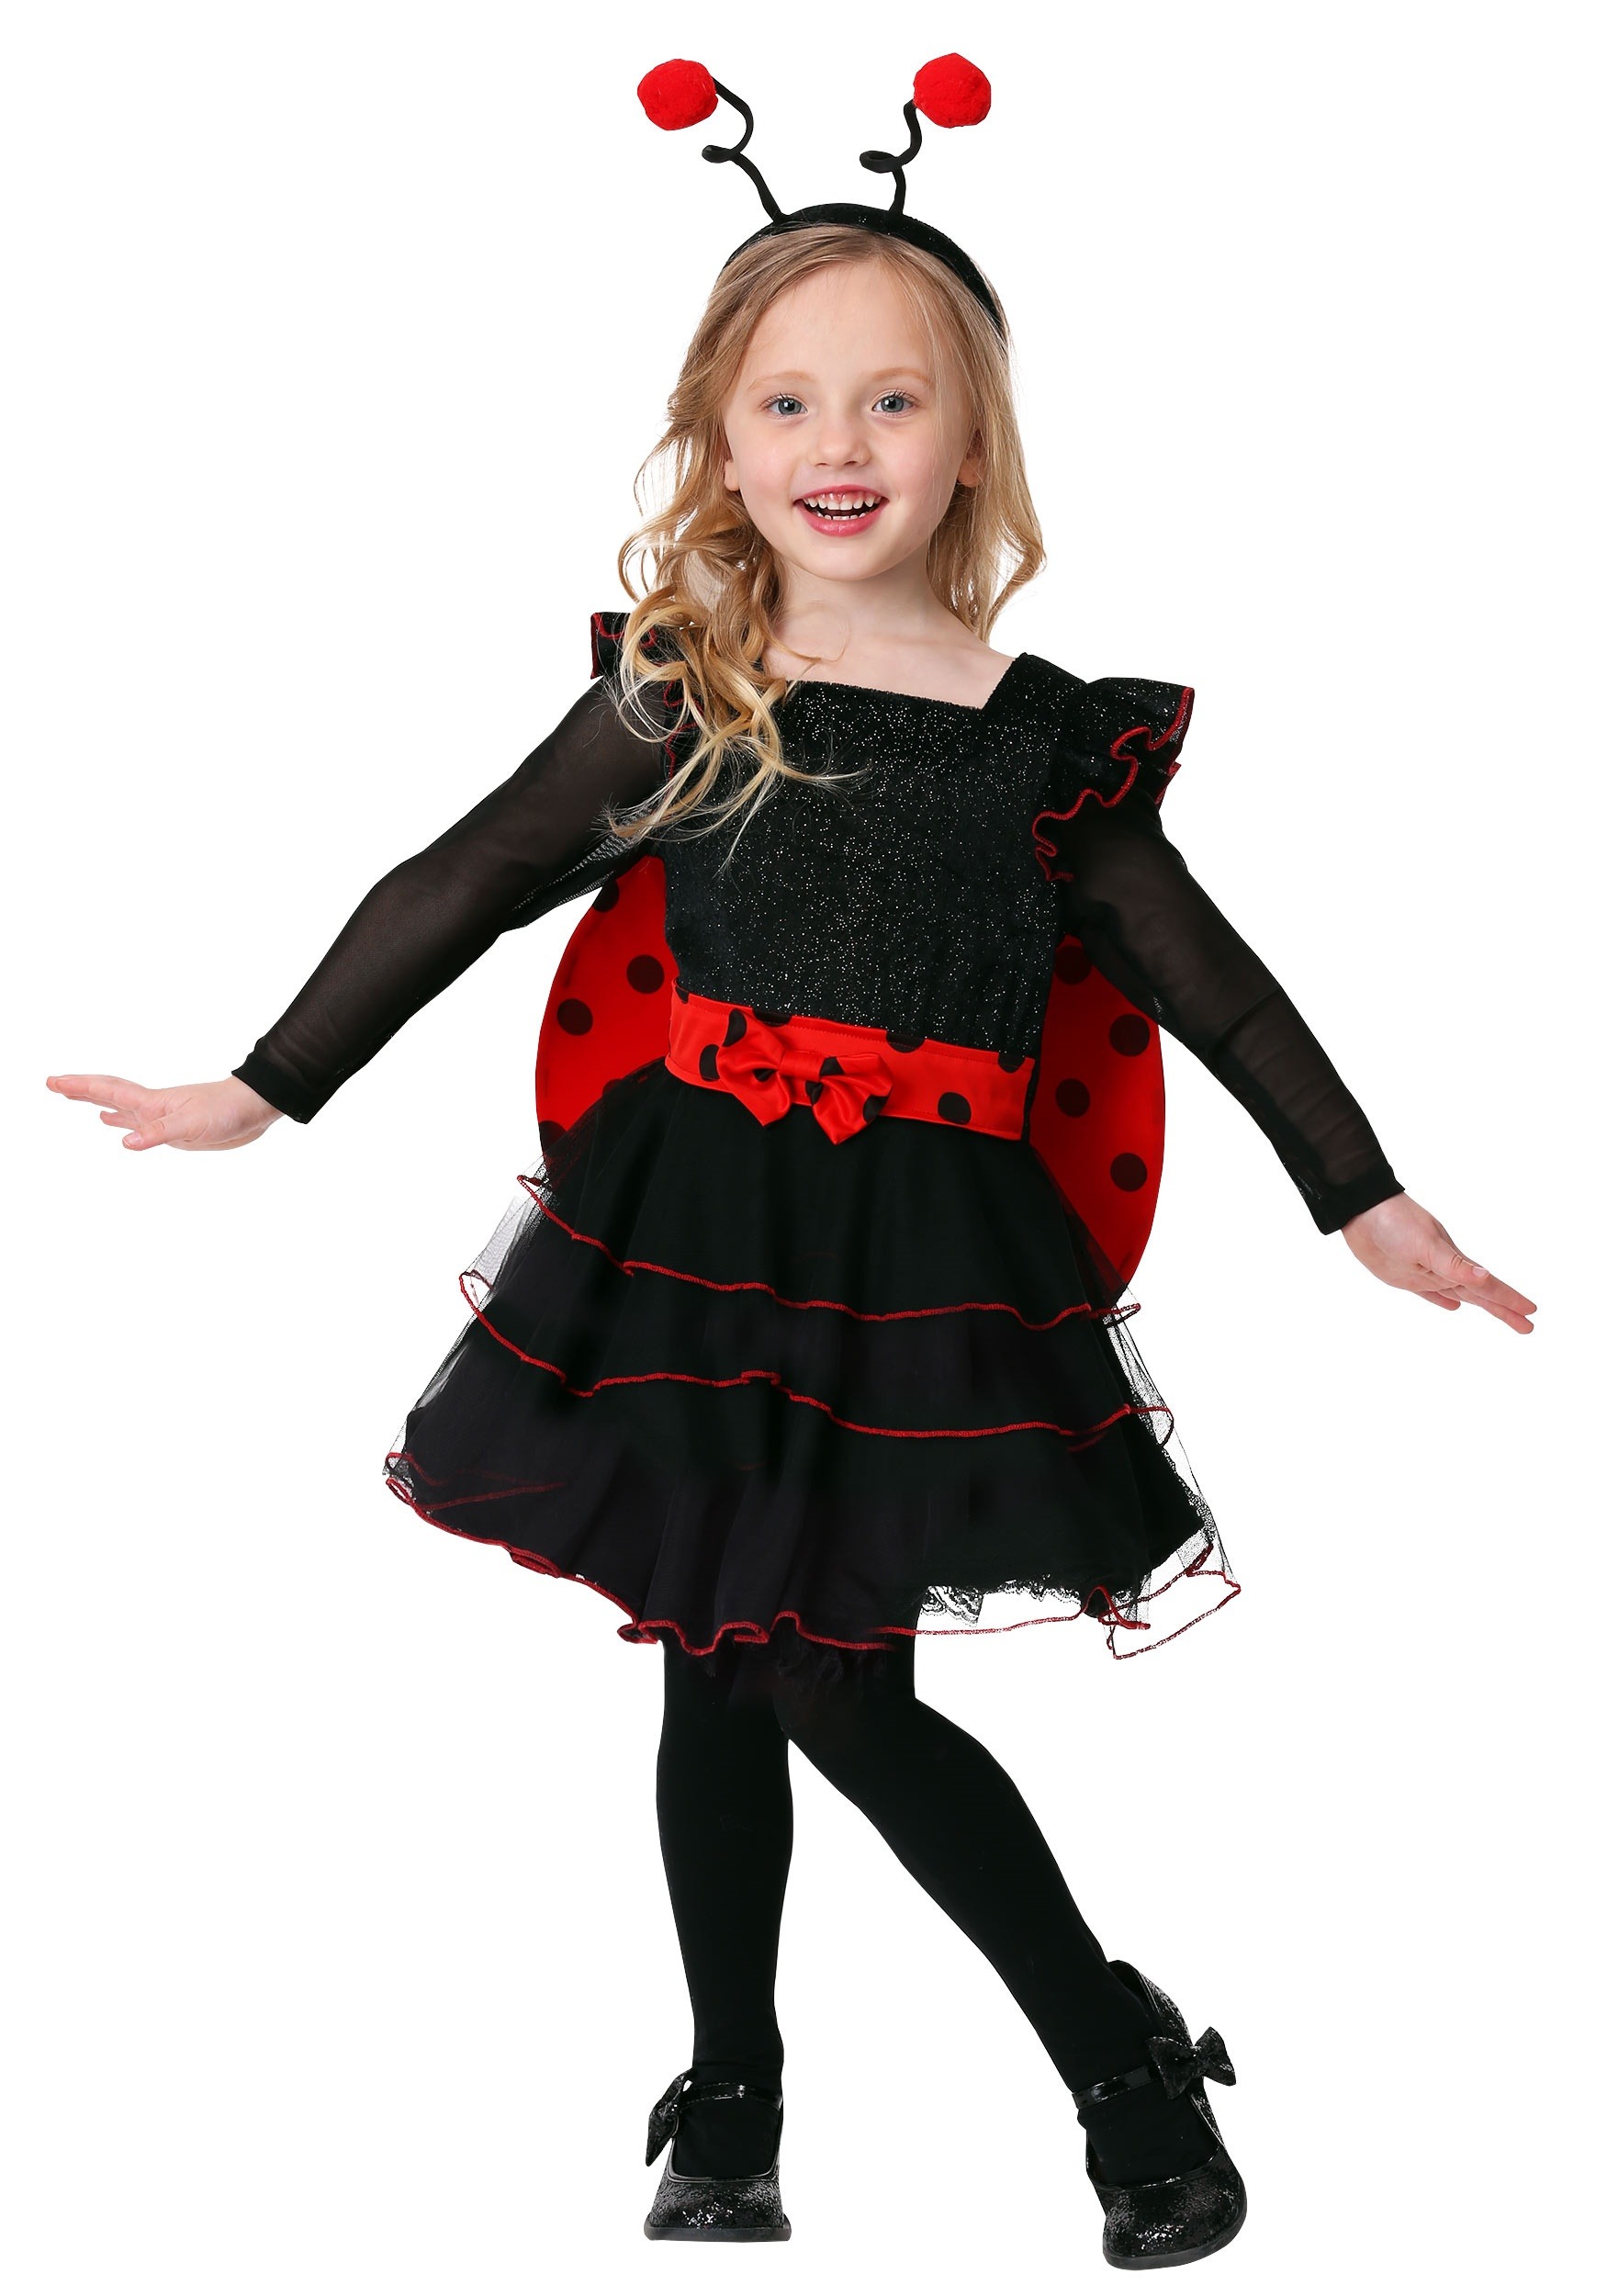 Photos - Fancy Dress Toddler FUN Costumes  Girl's Sweet Ladybug Costume Black/Red 